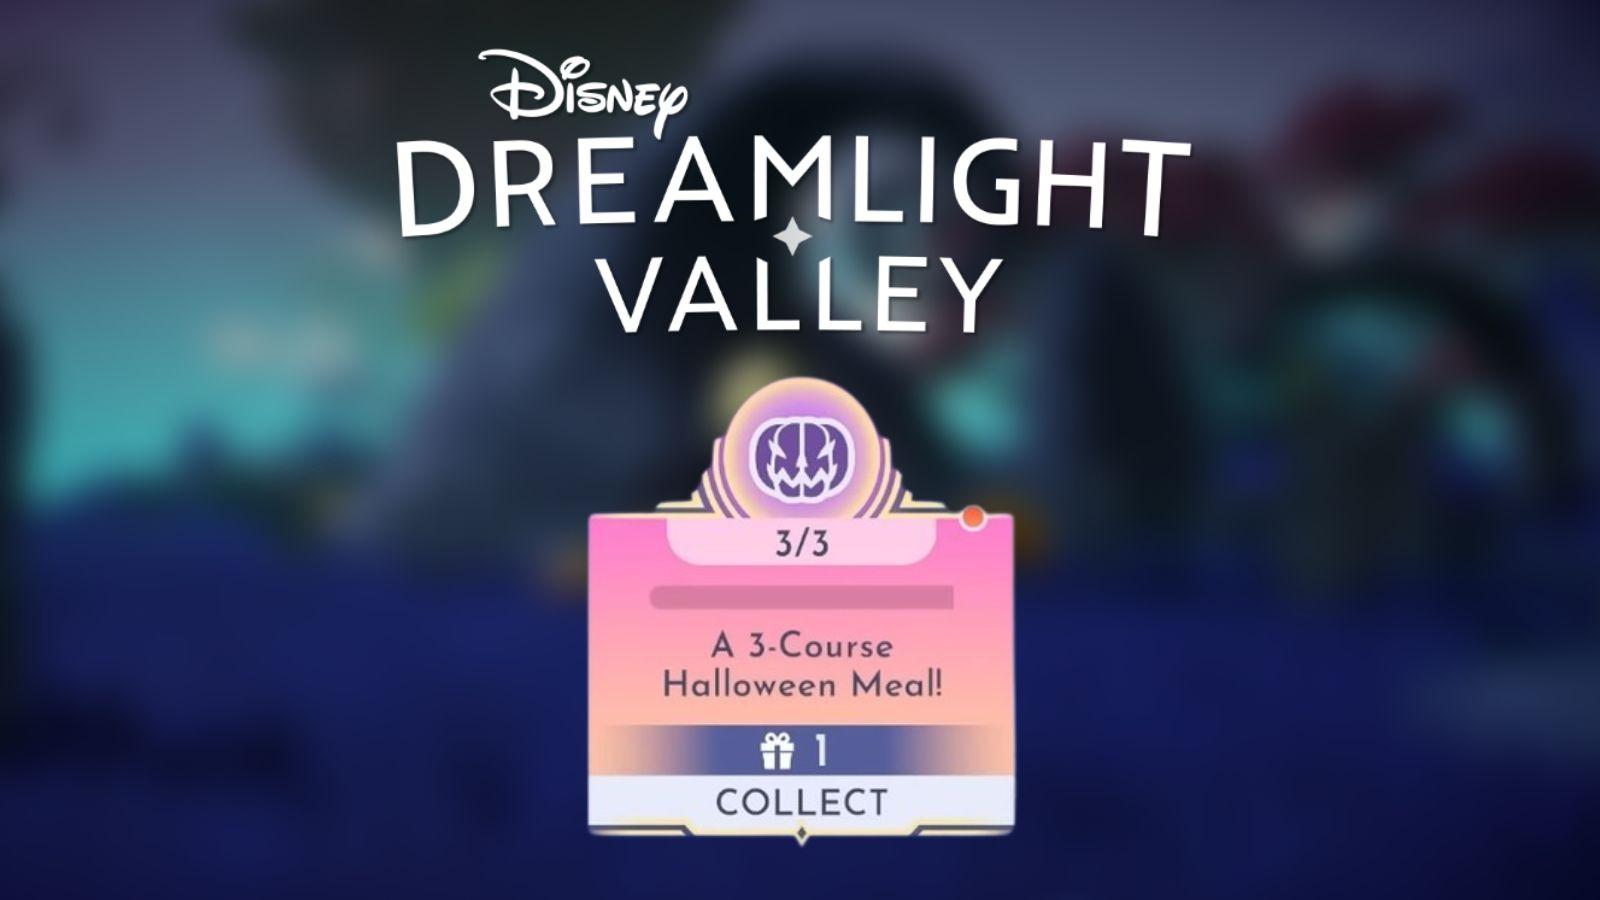 Disney Dreamlight Valley 3 course halloween meal